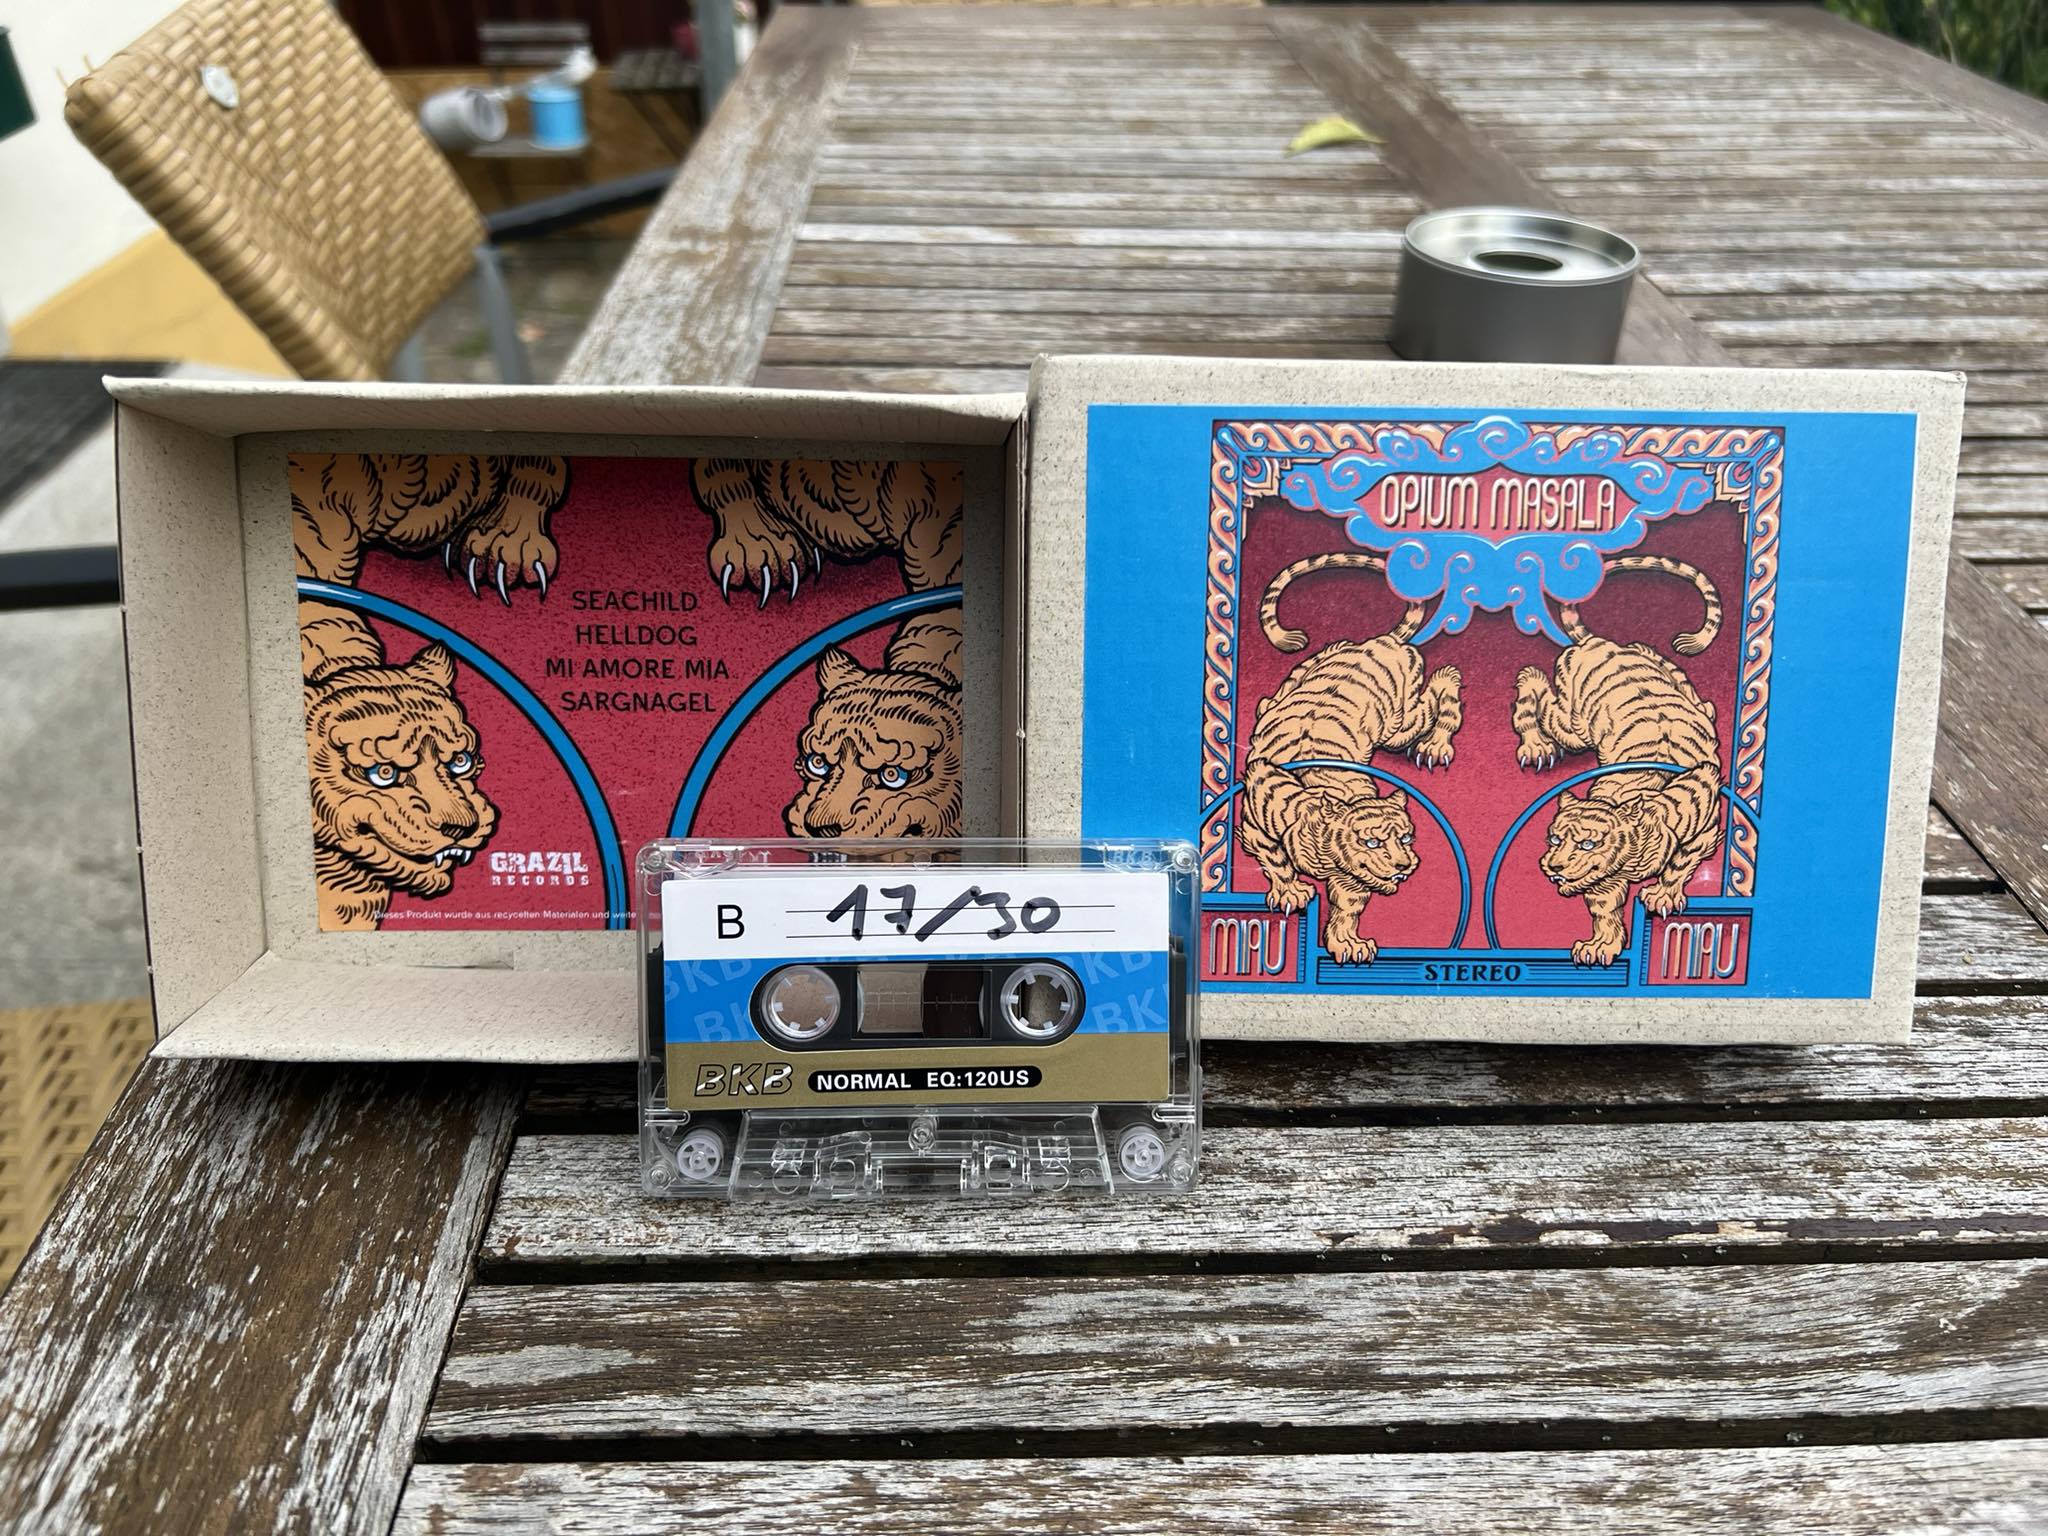 Opium Masala - Miau Miau Demo Tape grazil Records